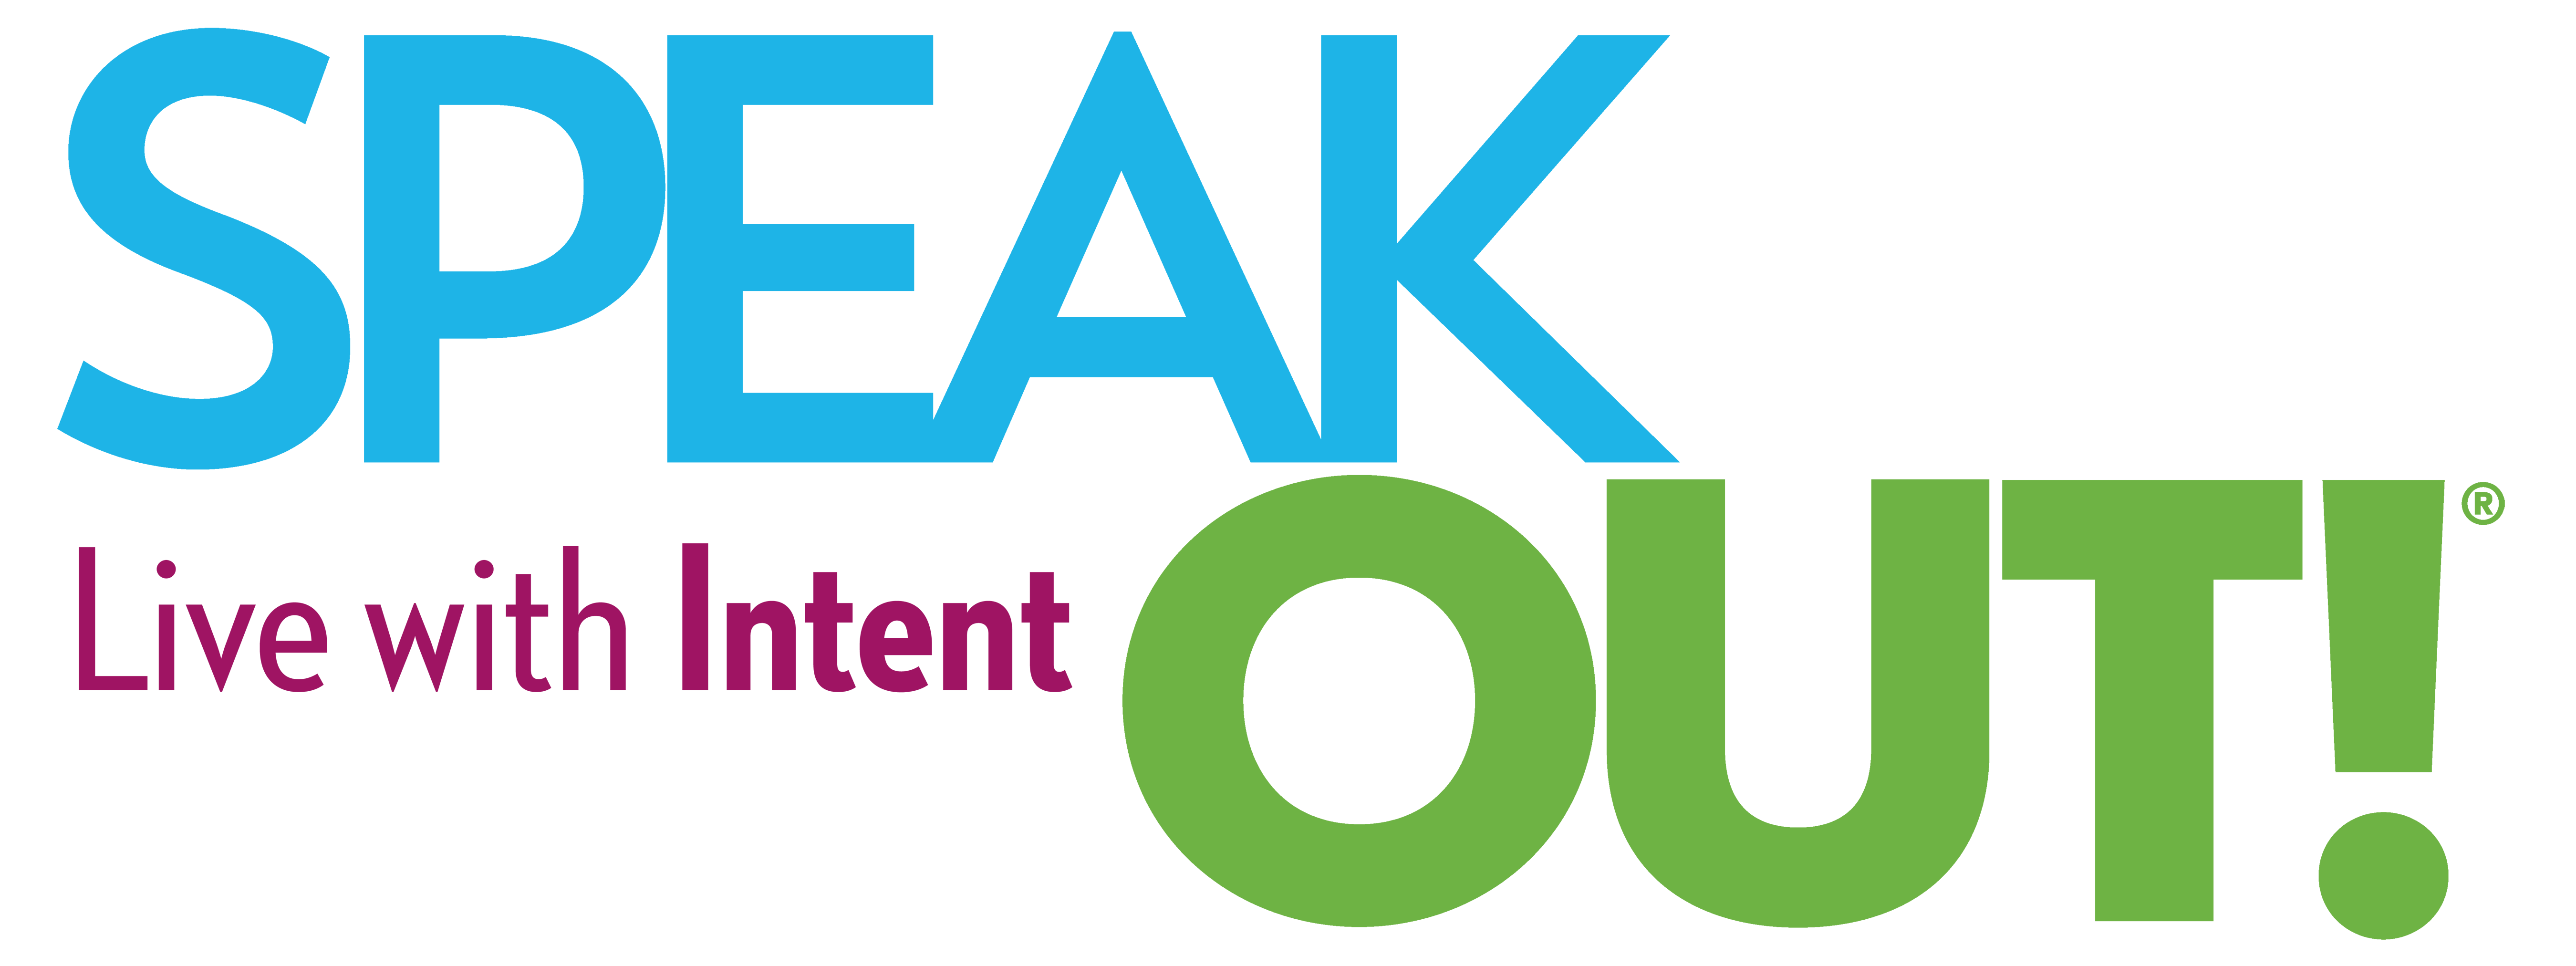 Speak out logo